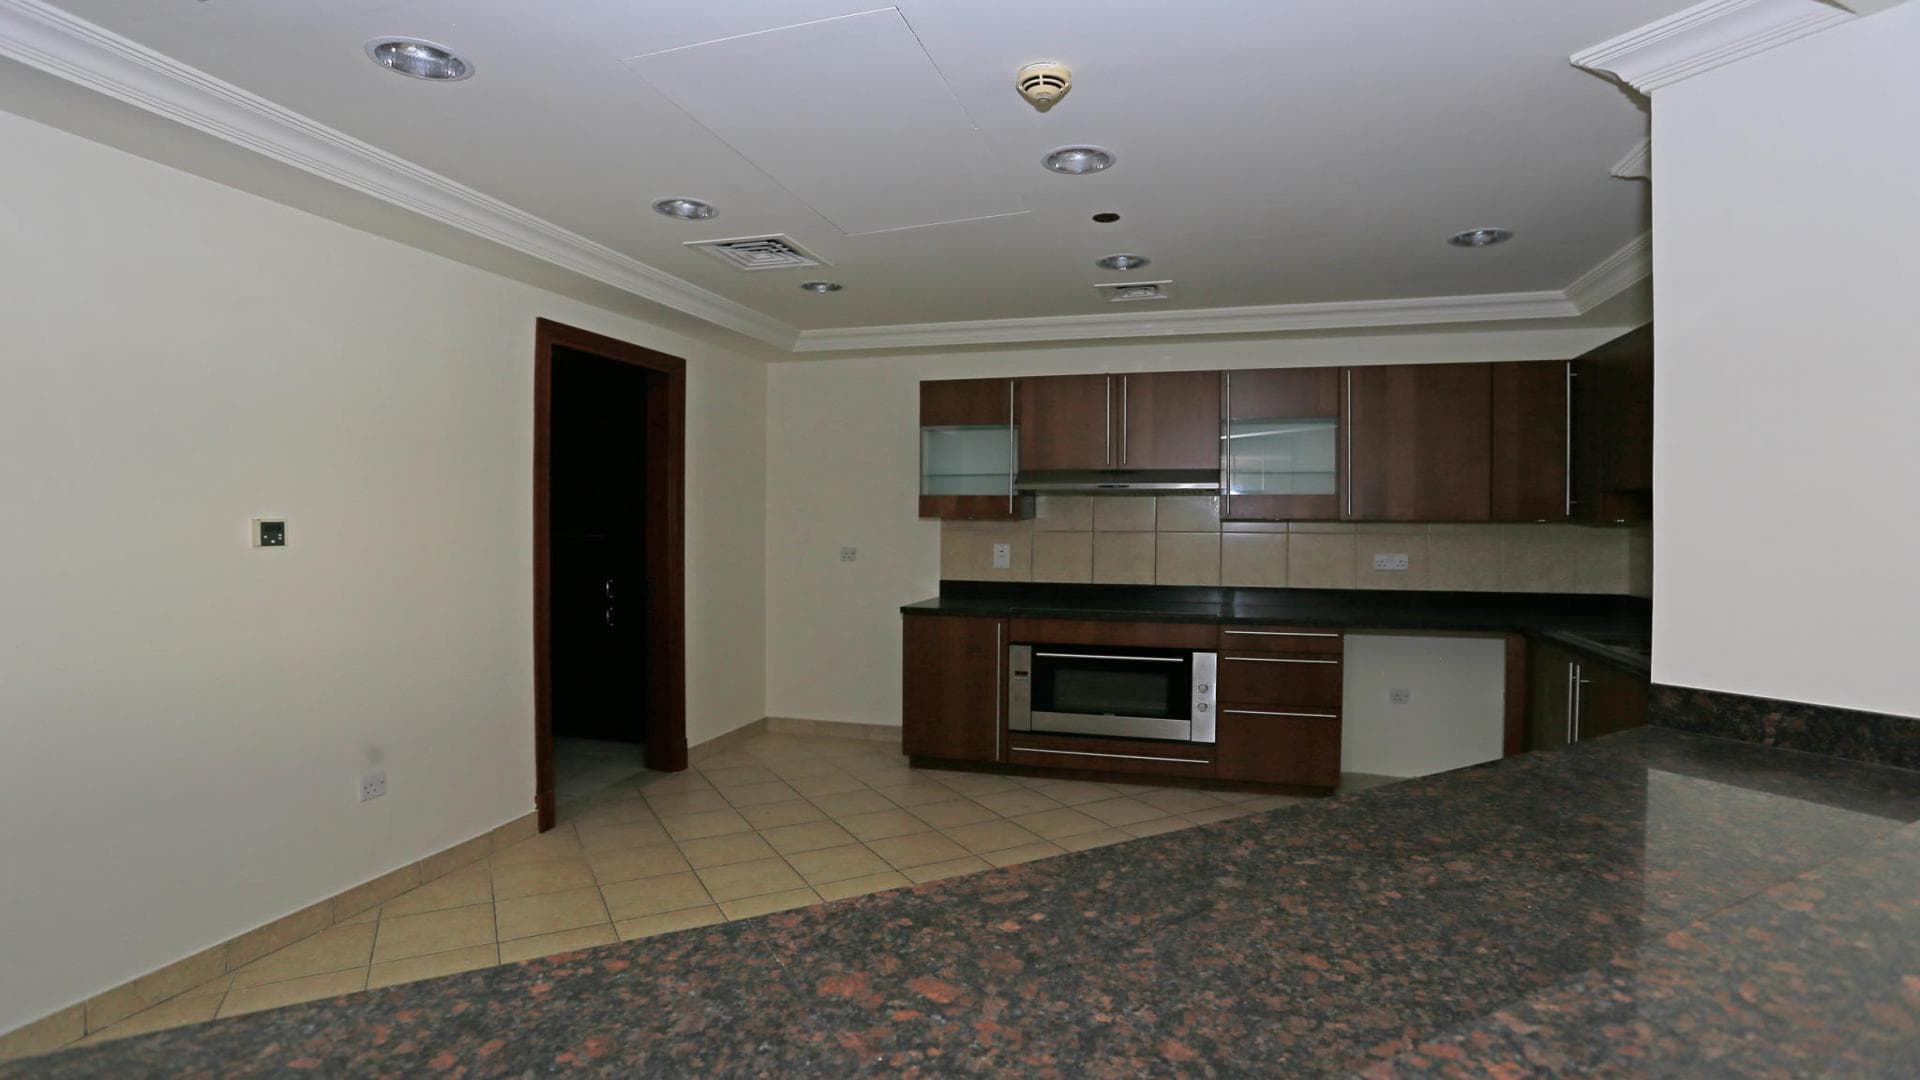 3 Bedroom Apartment For Sale Boulevard Plaza 1 Lp37433 130f91d7bc88f700.jpg